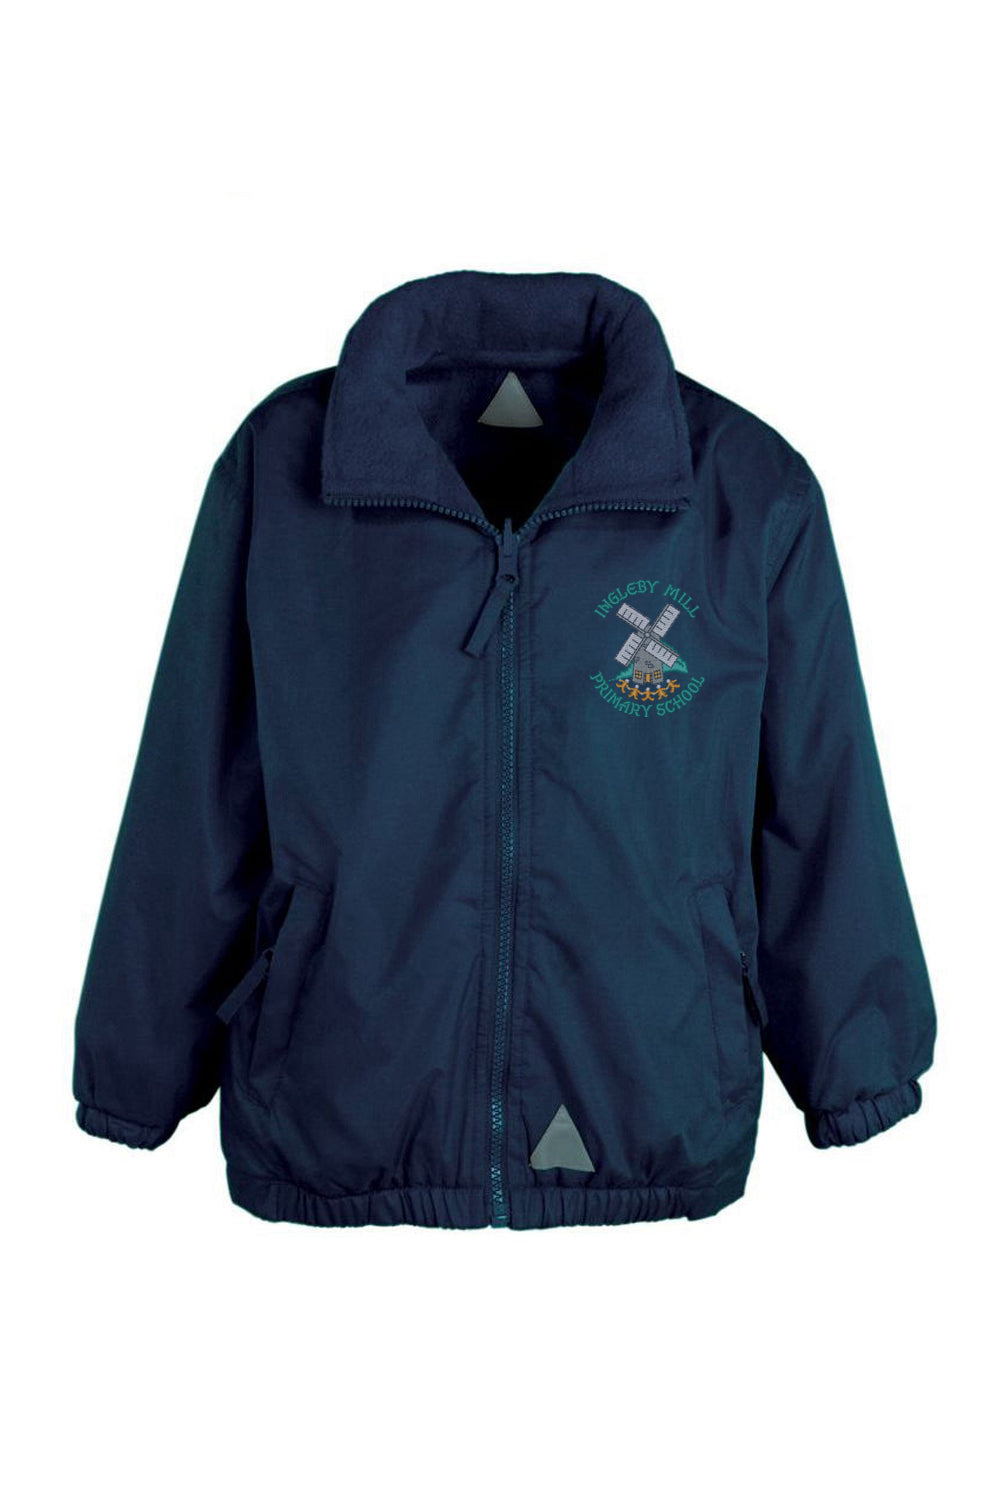 Ingleby Mill Nursery Navy Shower Jacket